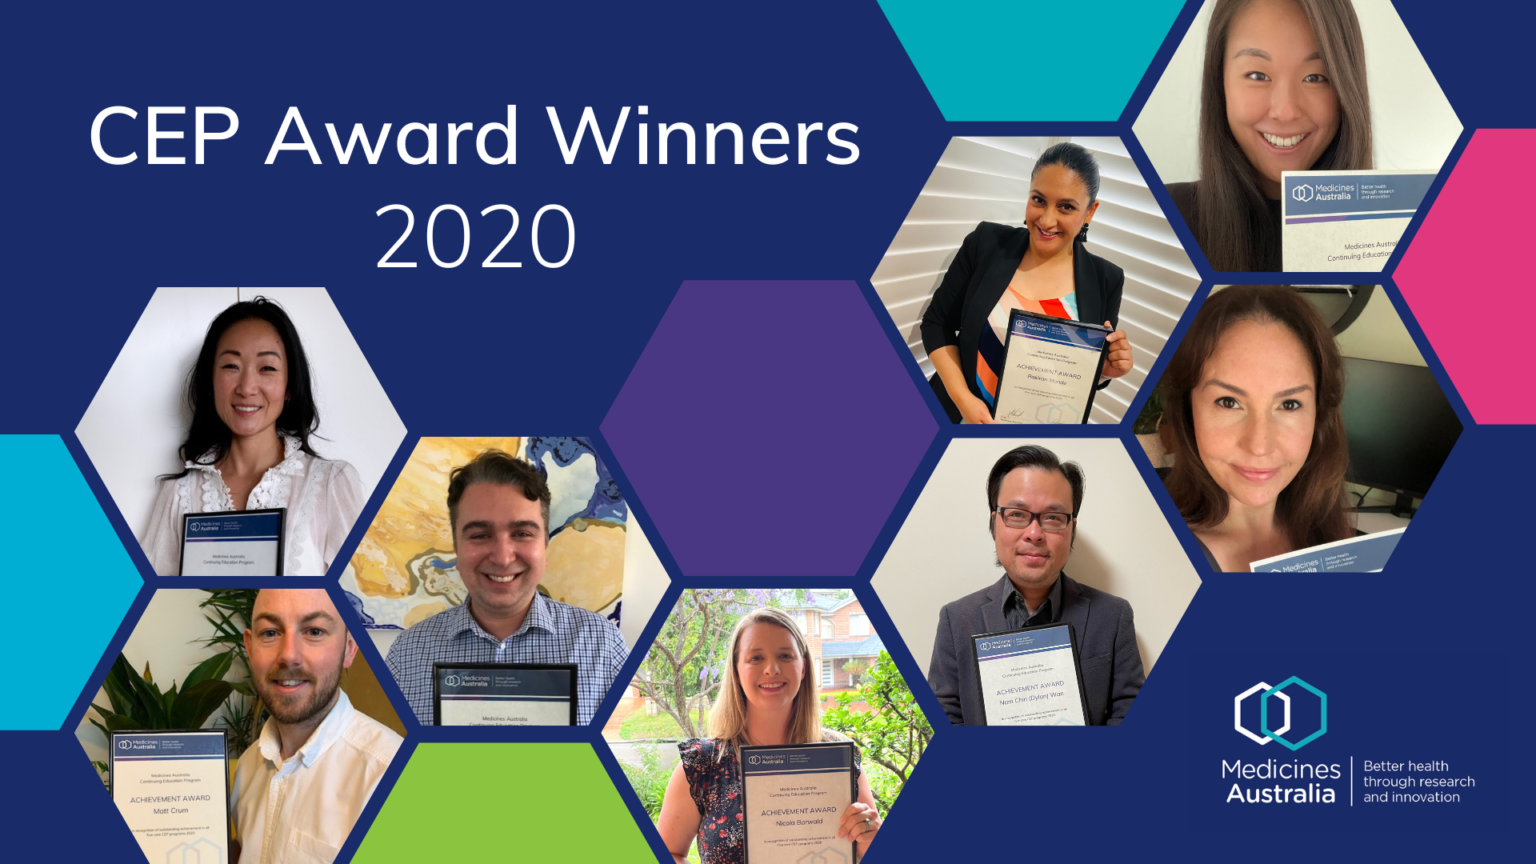 Award winners recognised – Medicines Australia